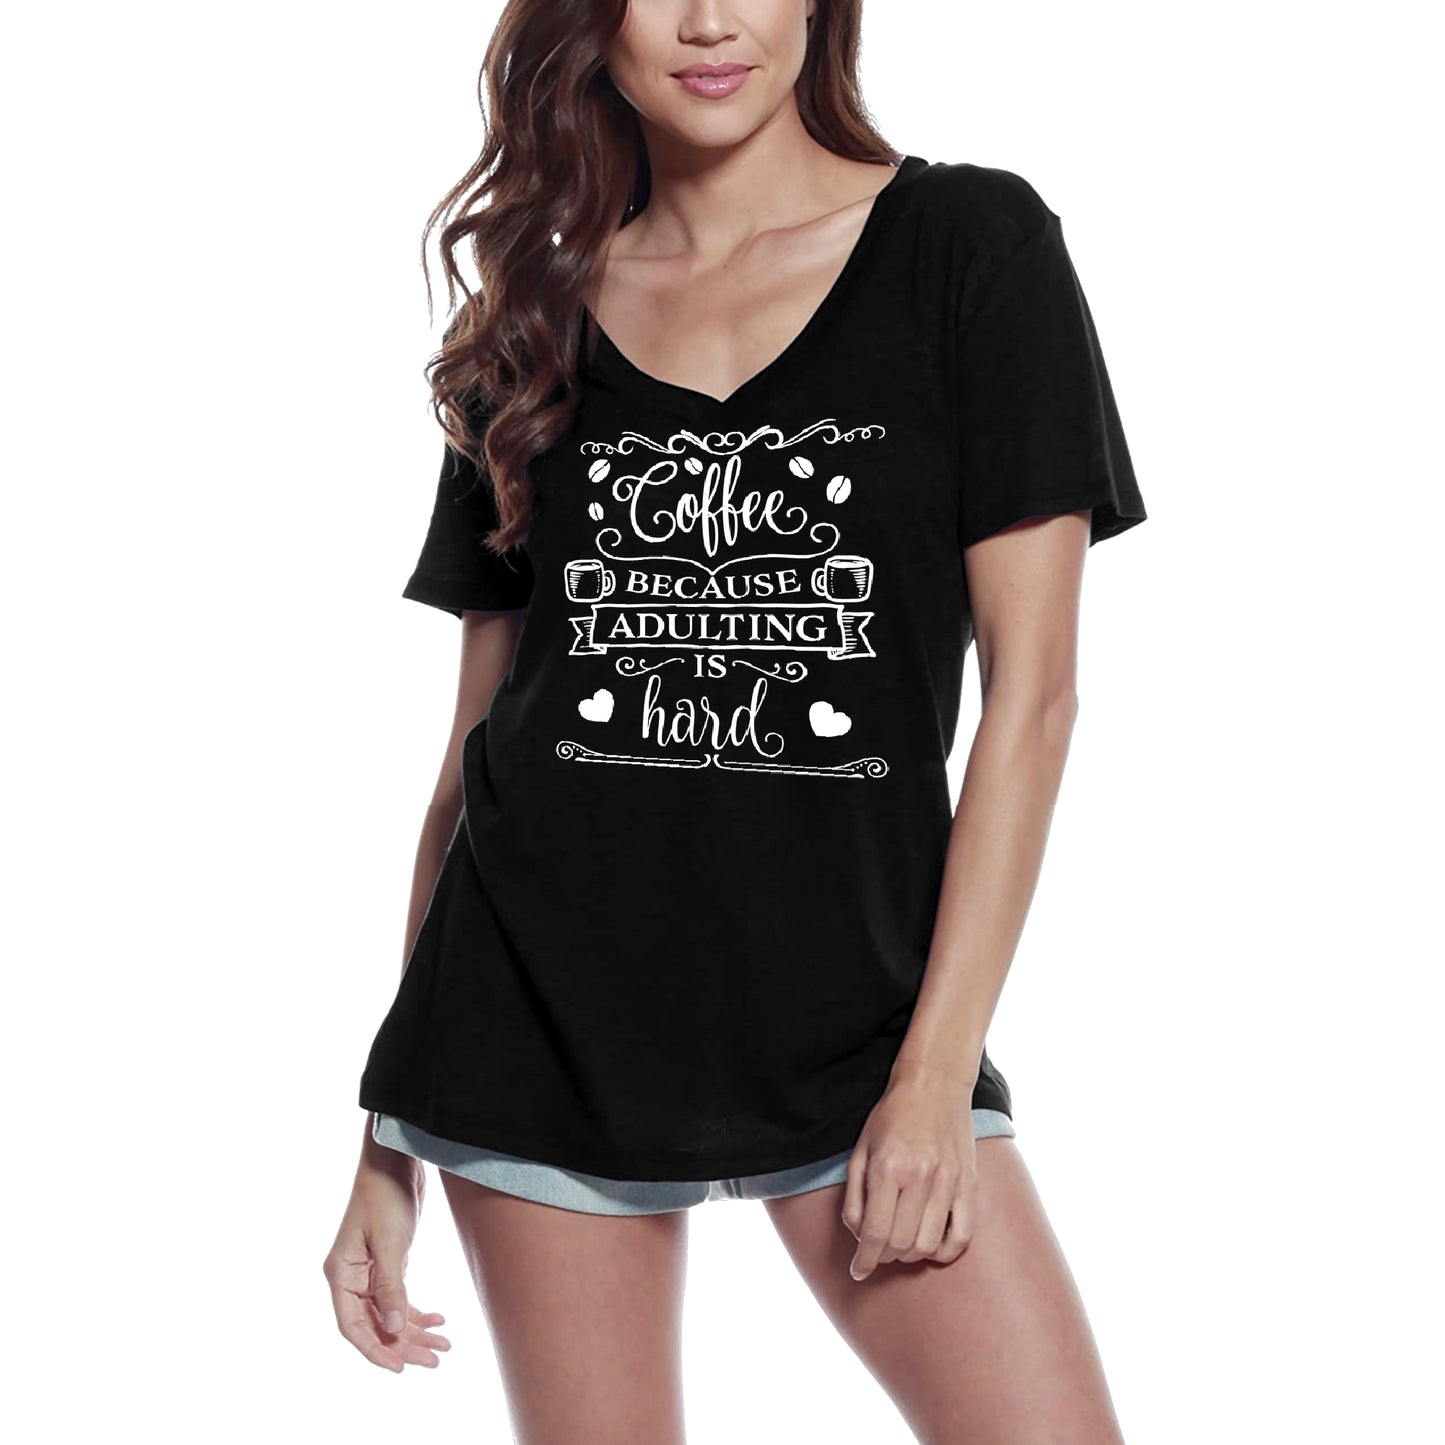 ULTRABASIC Women's T-Shirt Coffee Because Adulting is Hard - Short Sleeve Tee Shirt Tops